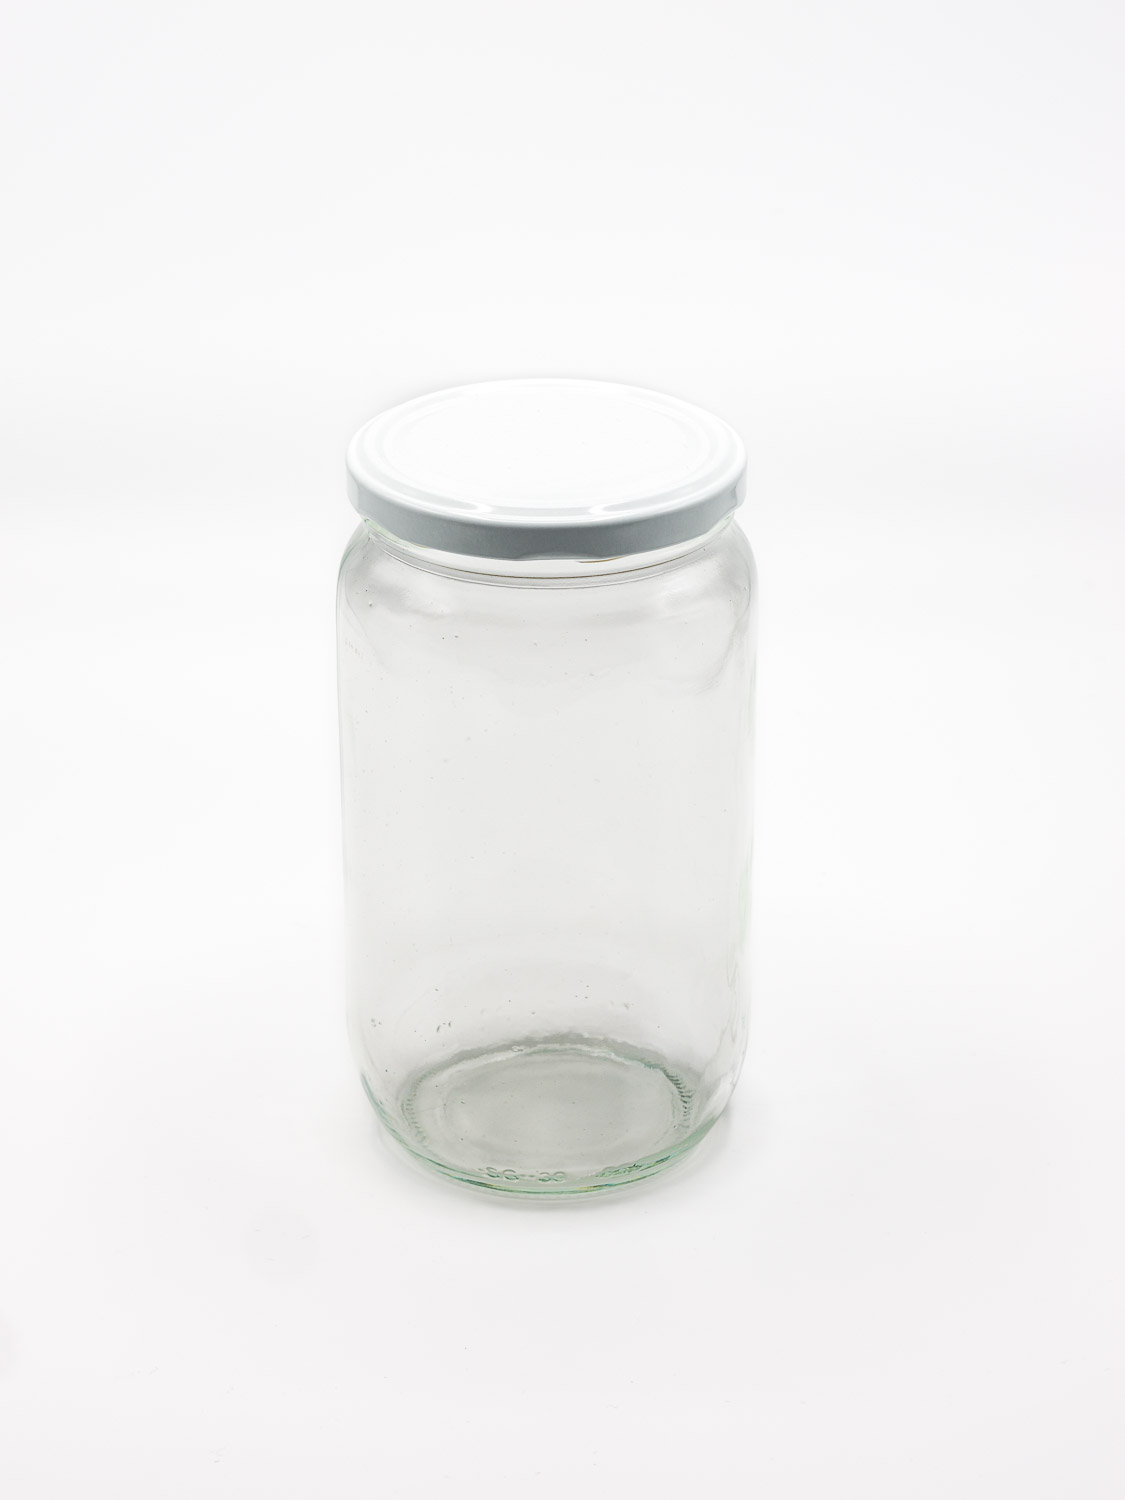 Jar around 850 ml